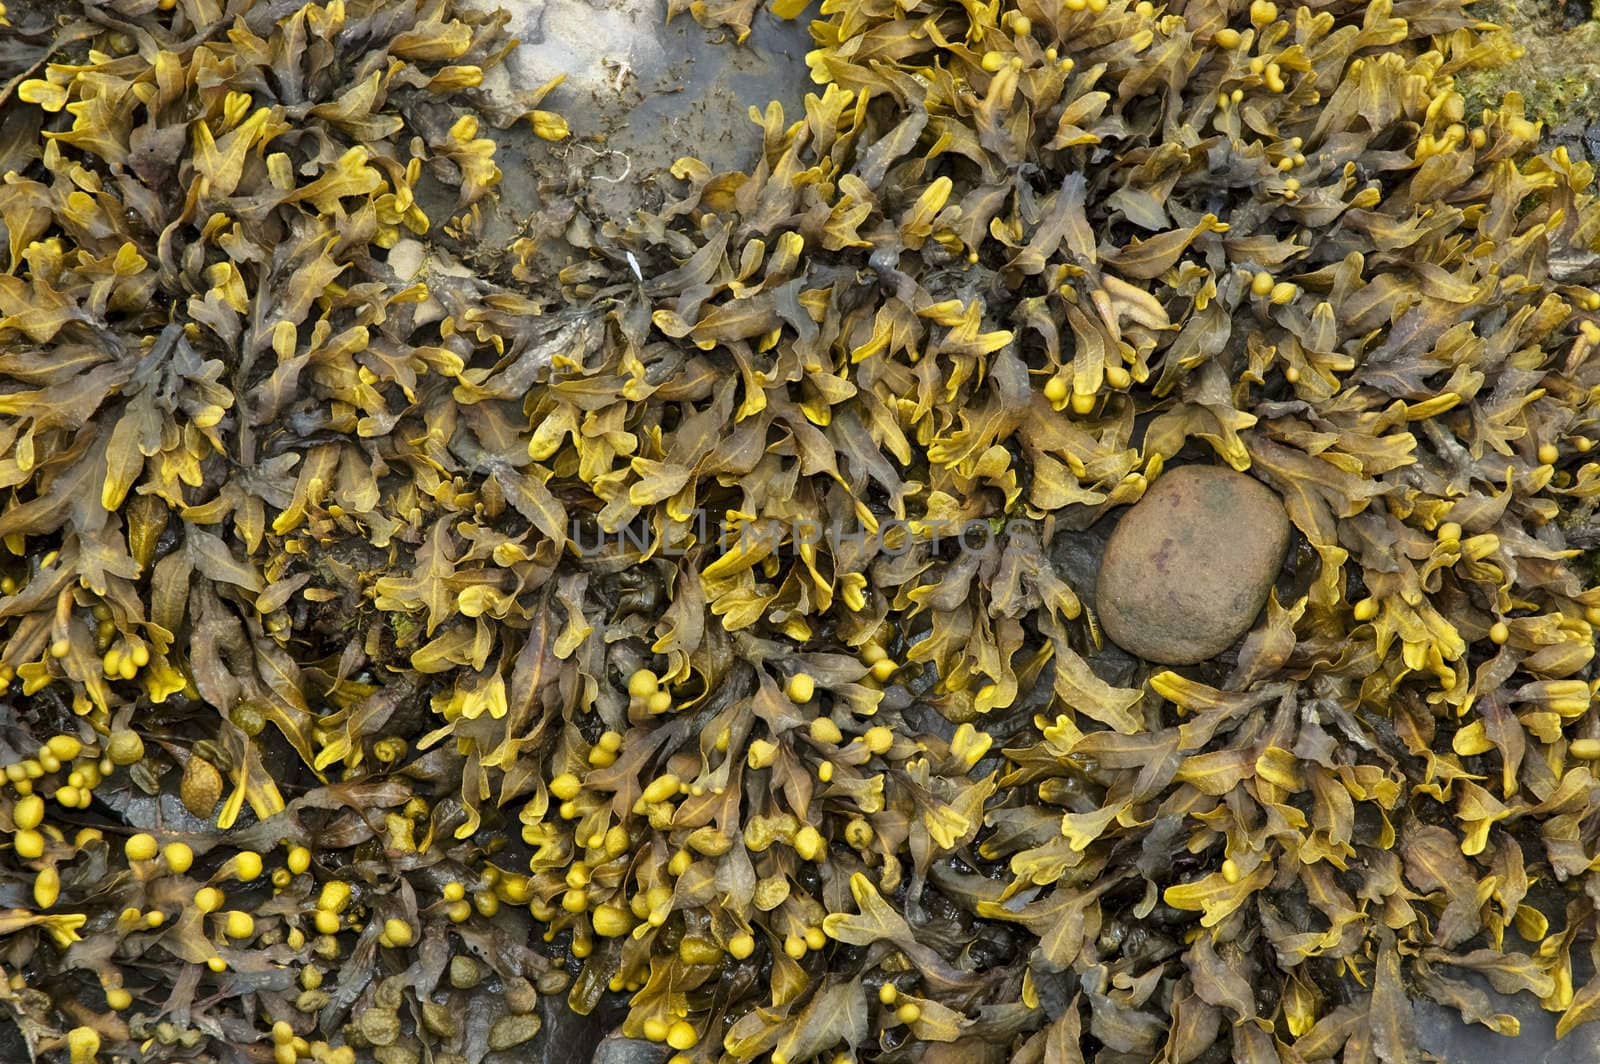 Algae on the beach in Ireland.